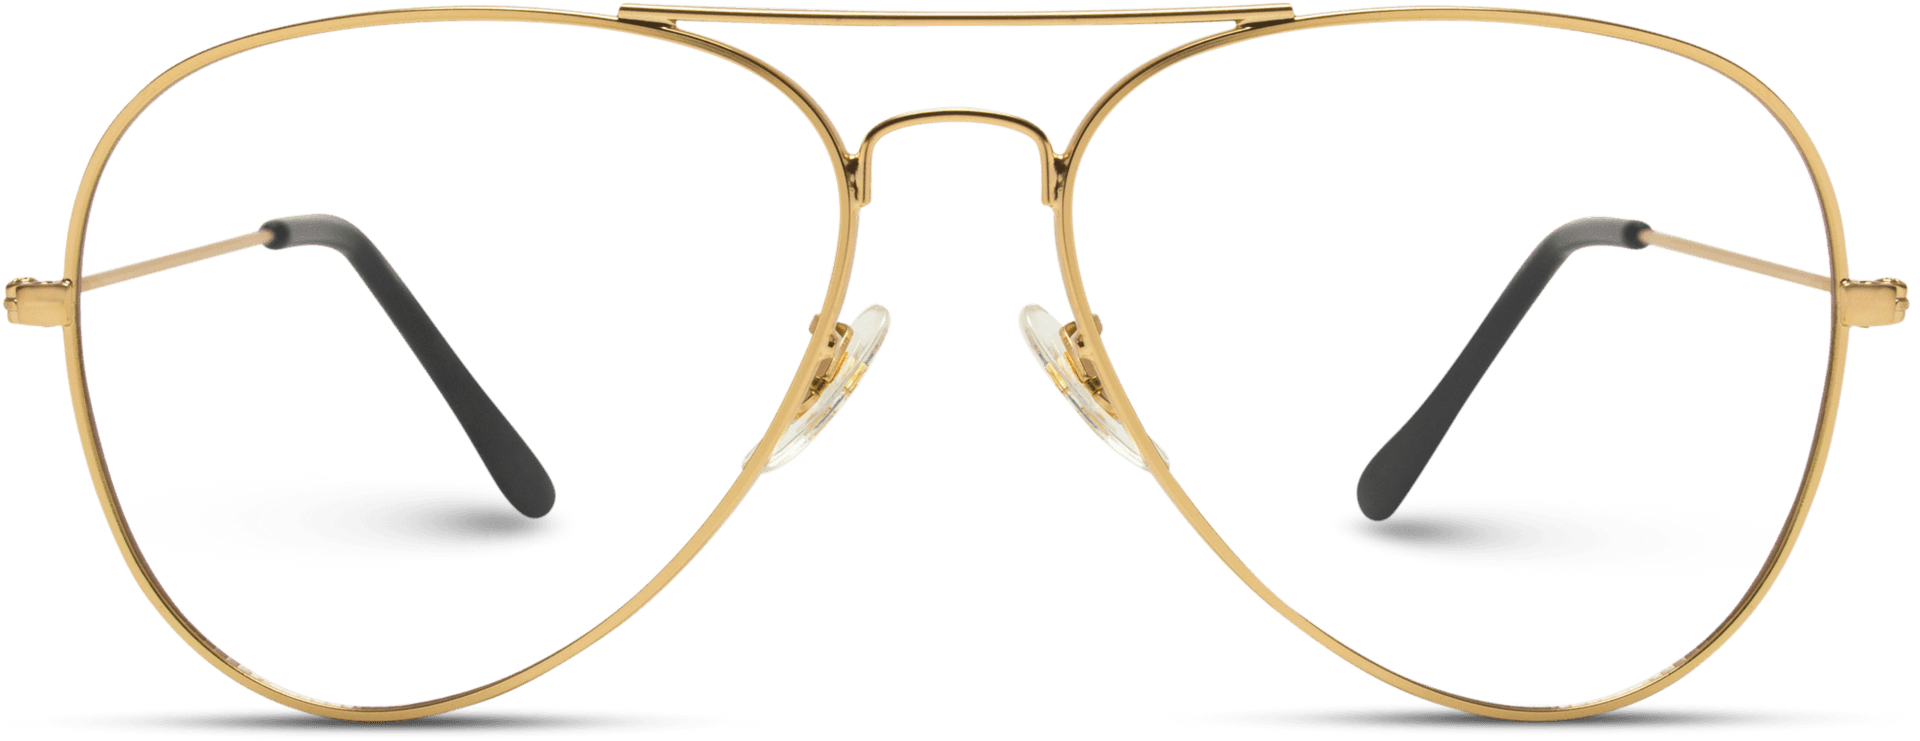 Gold Aviator Sunglasses Transparent Background PNG